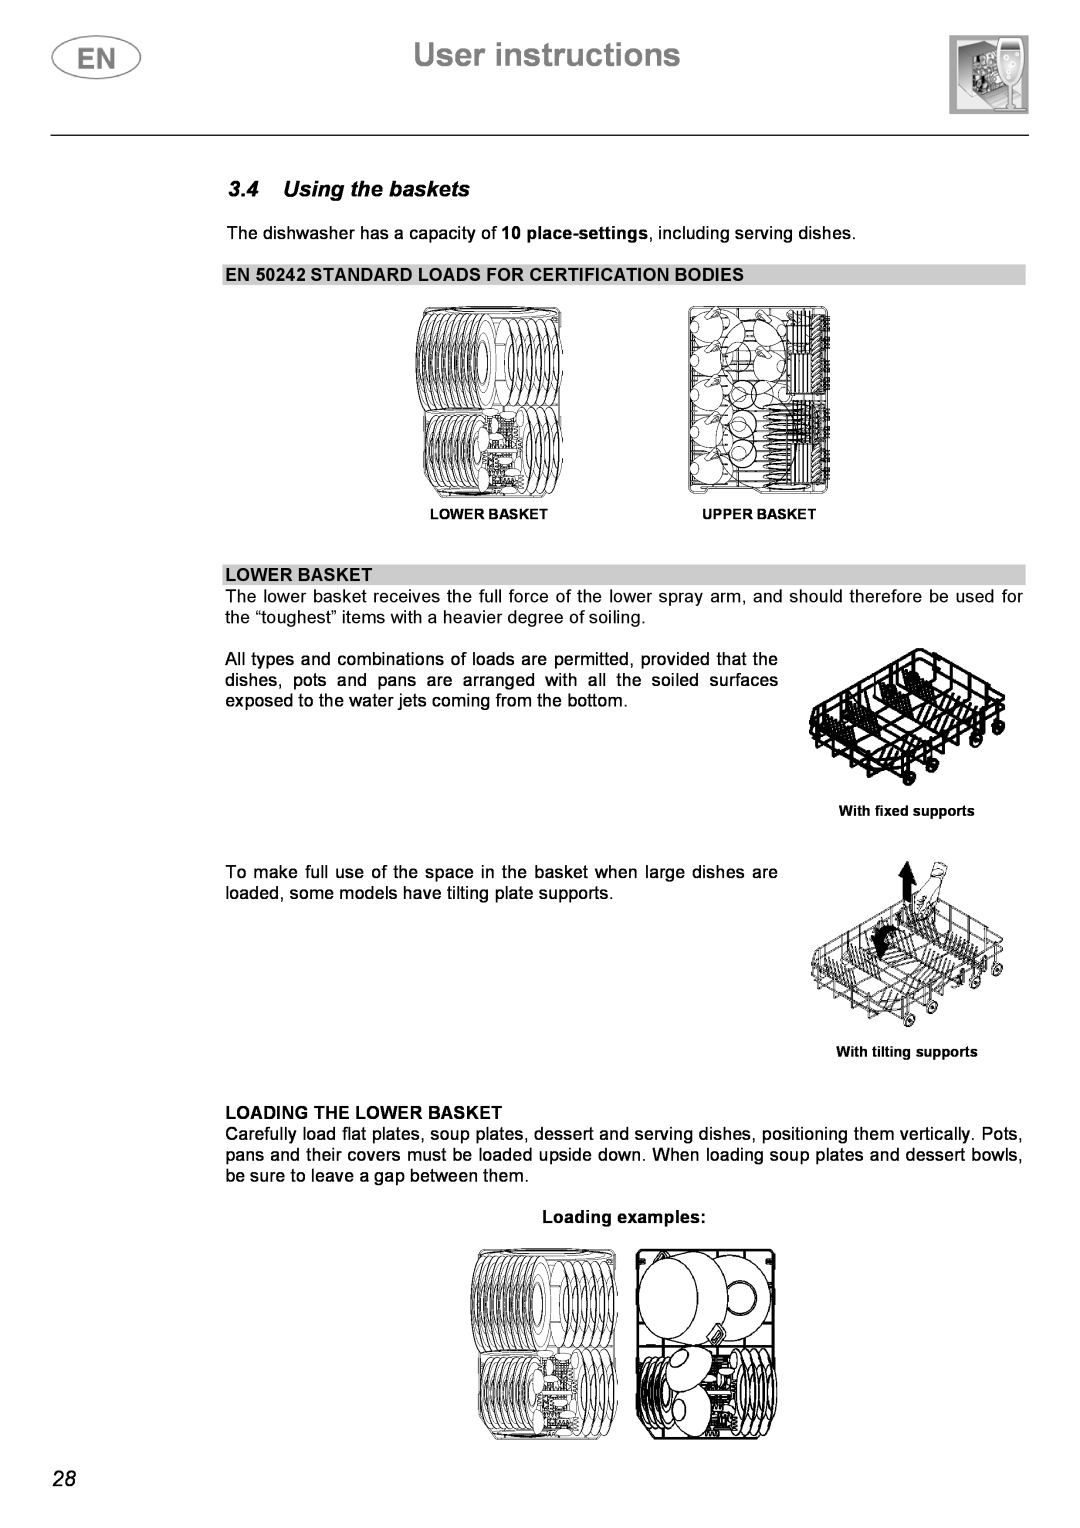 Smeg ST1108 User instructions, 3.4Using the baskets, EN 50242 STANDARD LOADS FOR CERTIFICATION BODIES, Lower Basket 